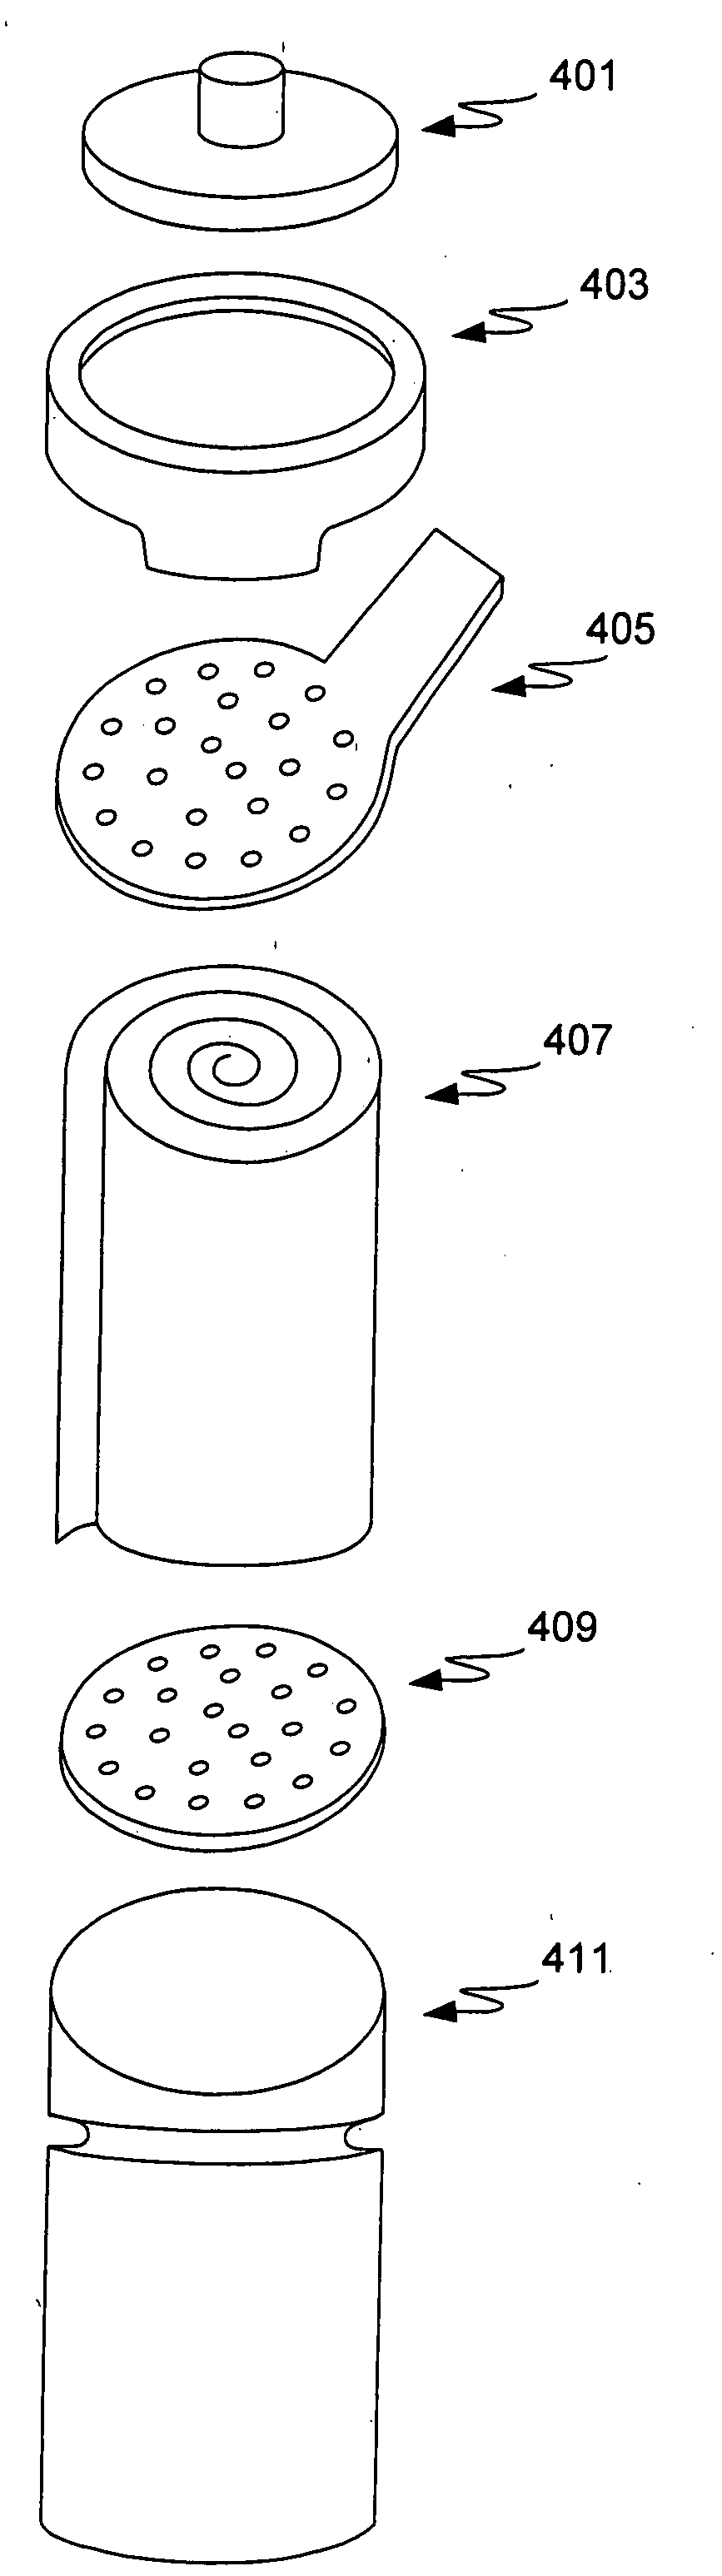 Method of manufacturing nickel zinc batteries